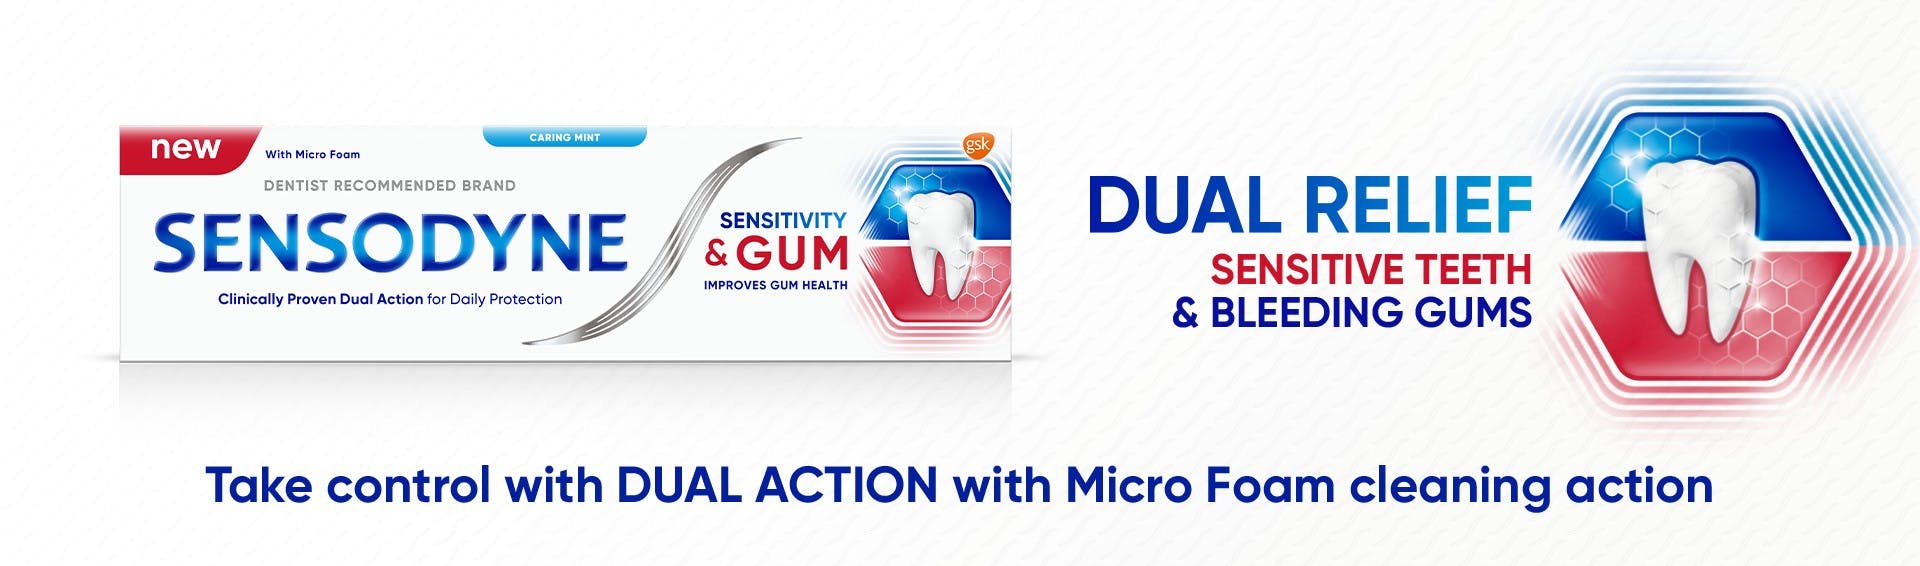 Dual relief from sensitive teeth banner desktop